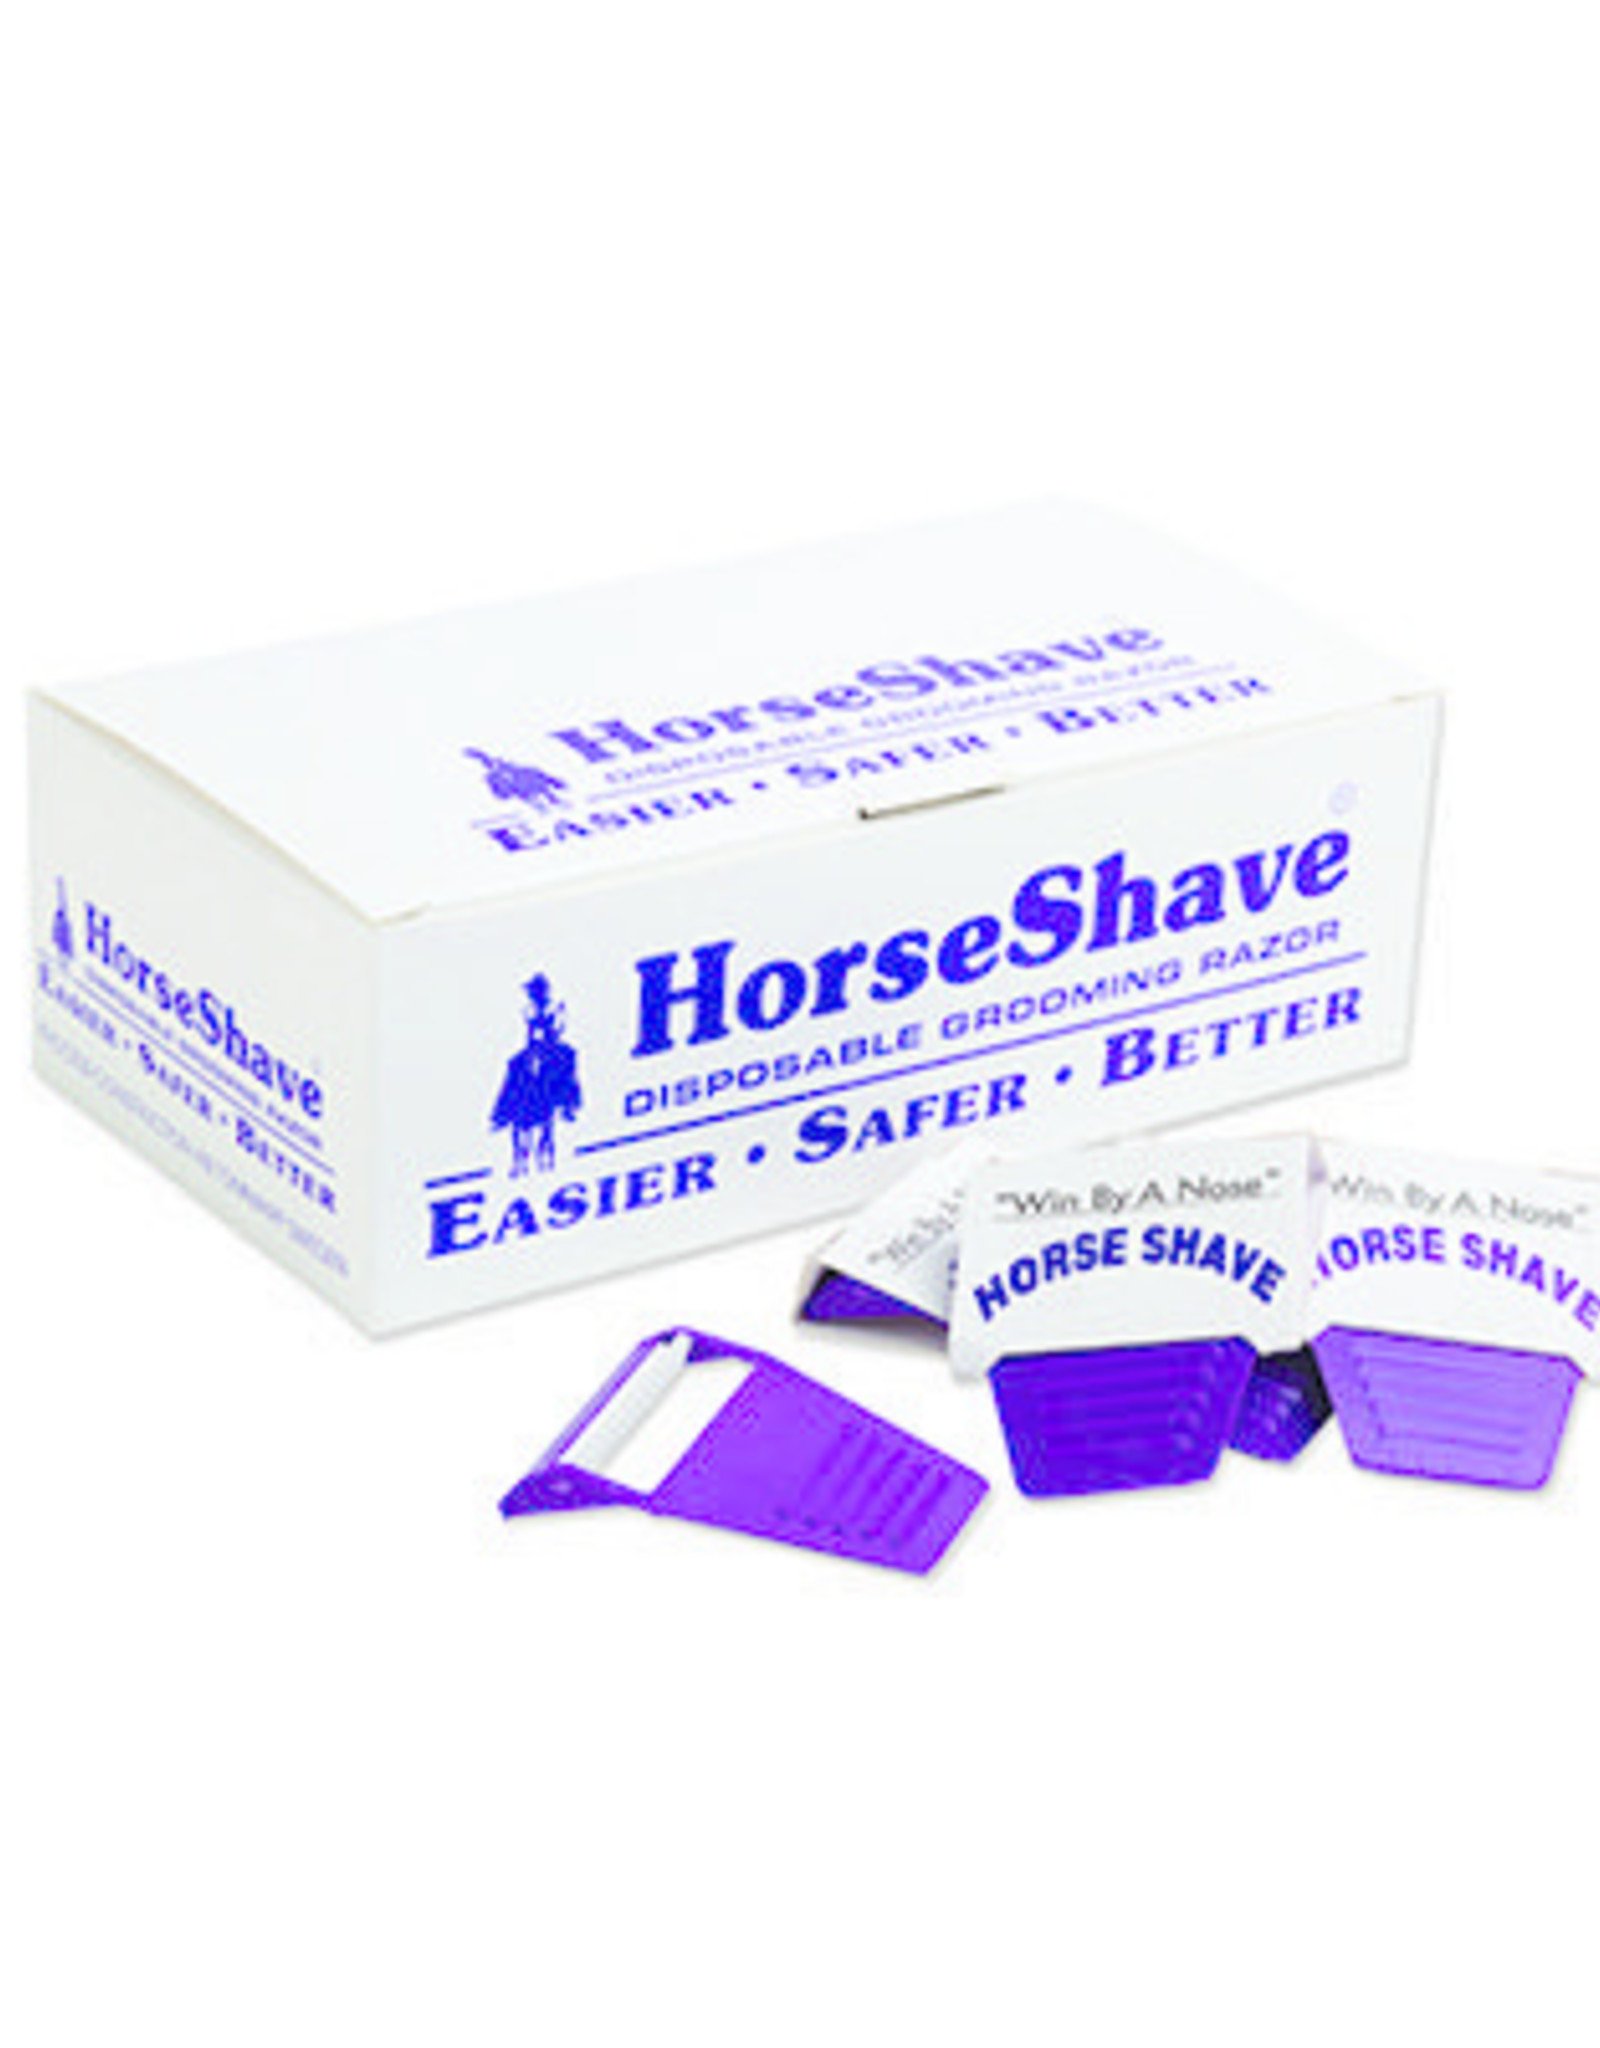 HorseShave Disposable Grooming Razor